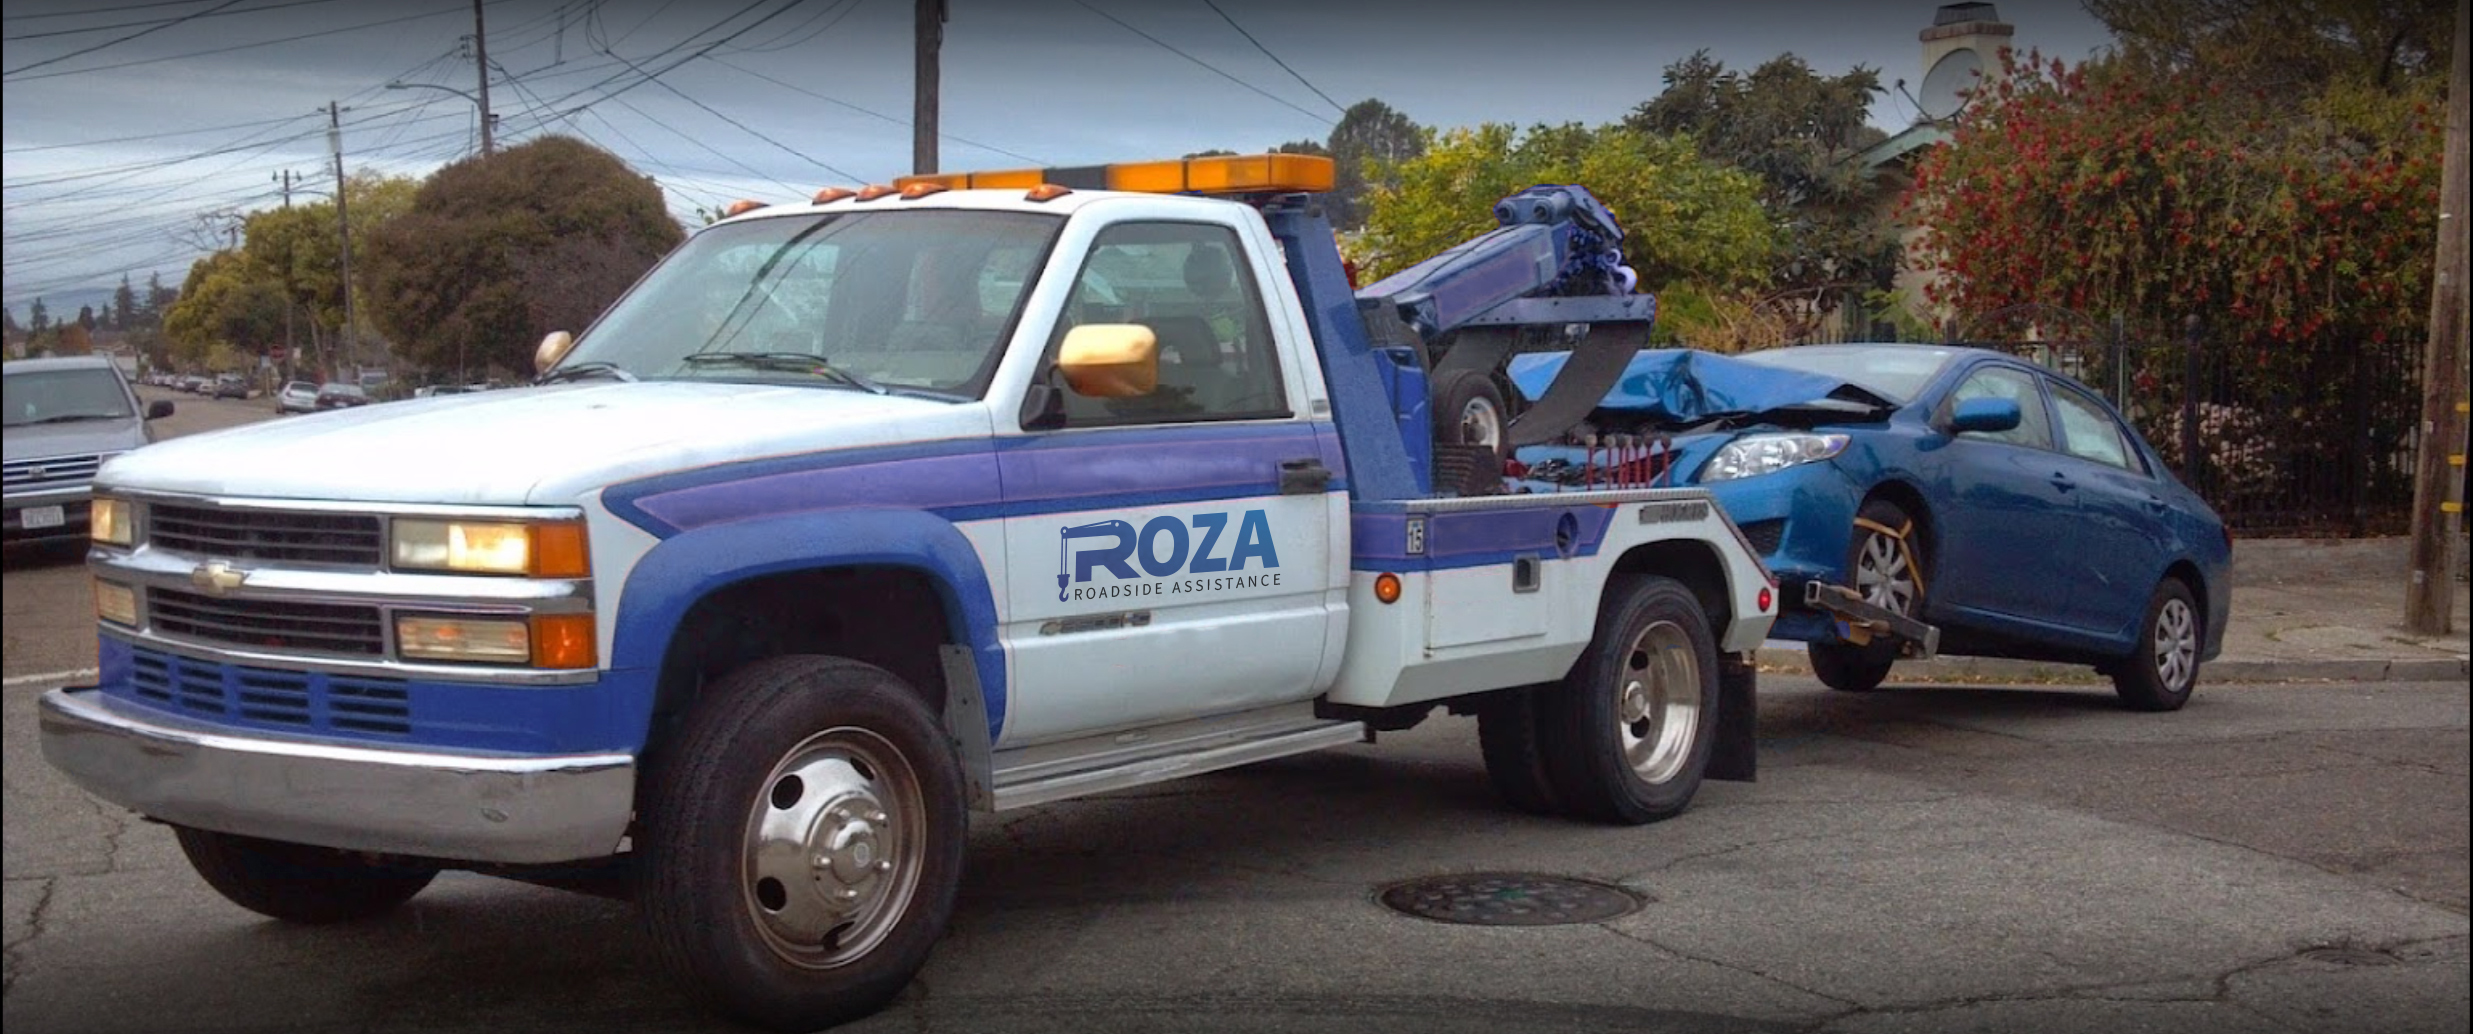 Roza Roadside Assistance